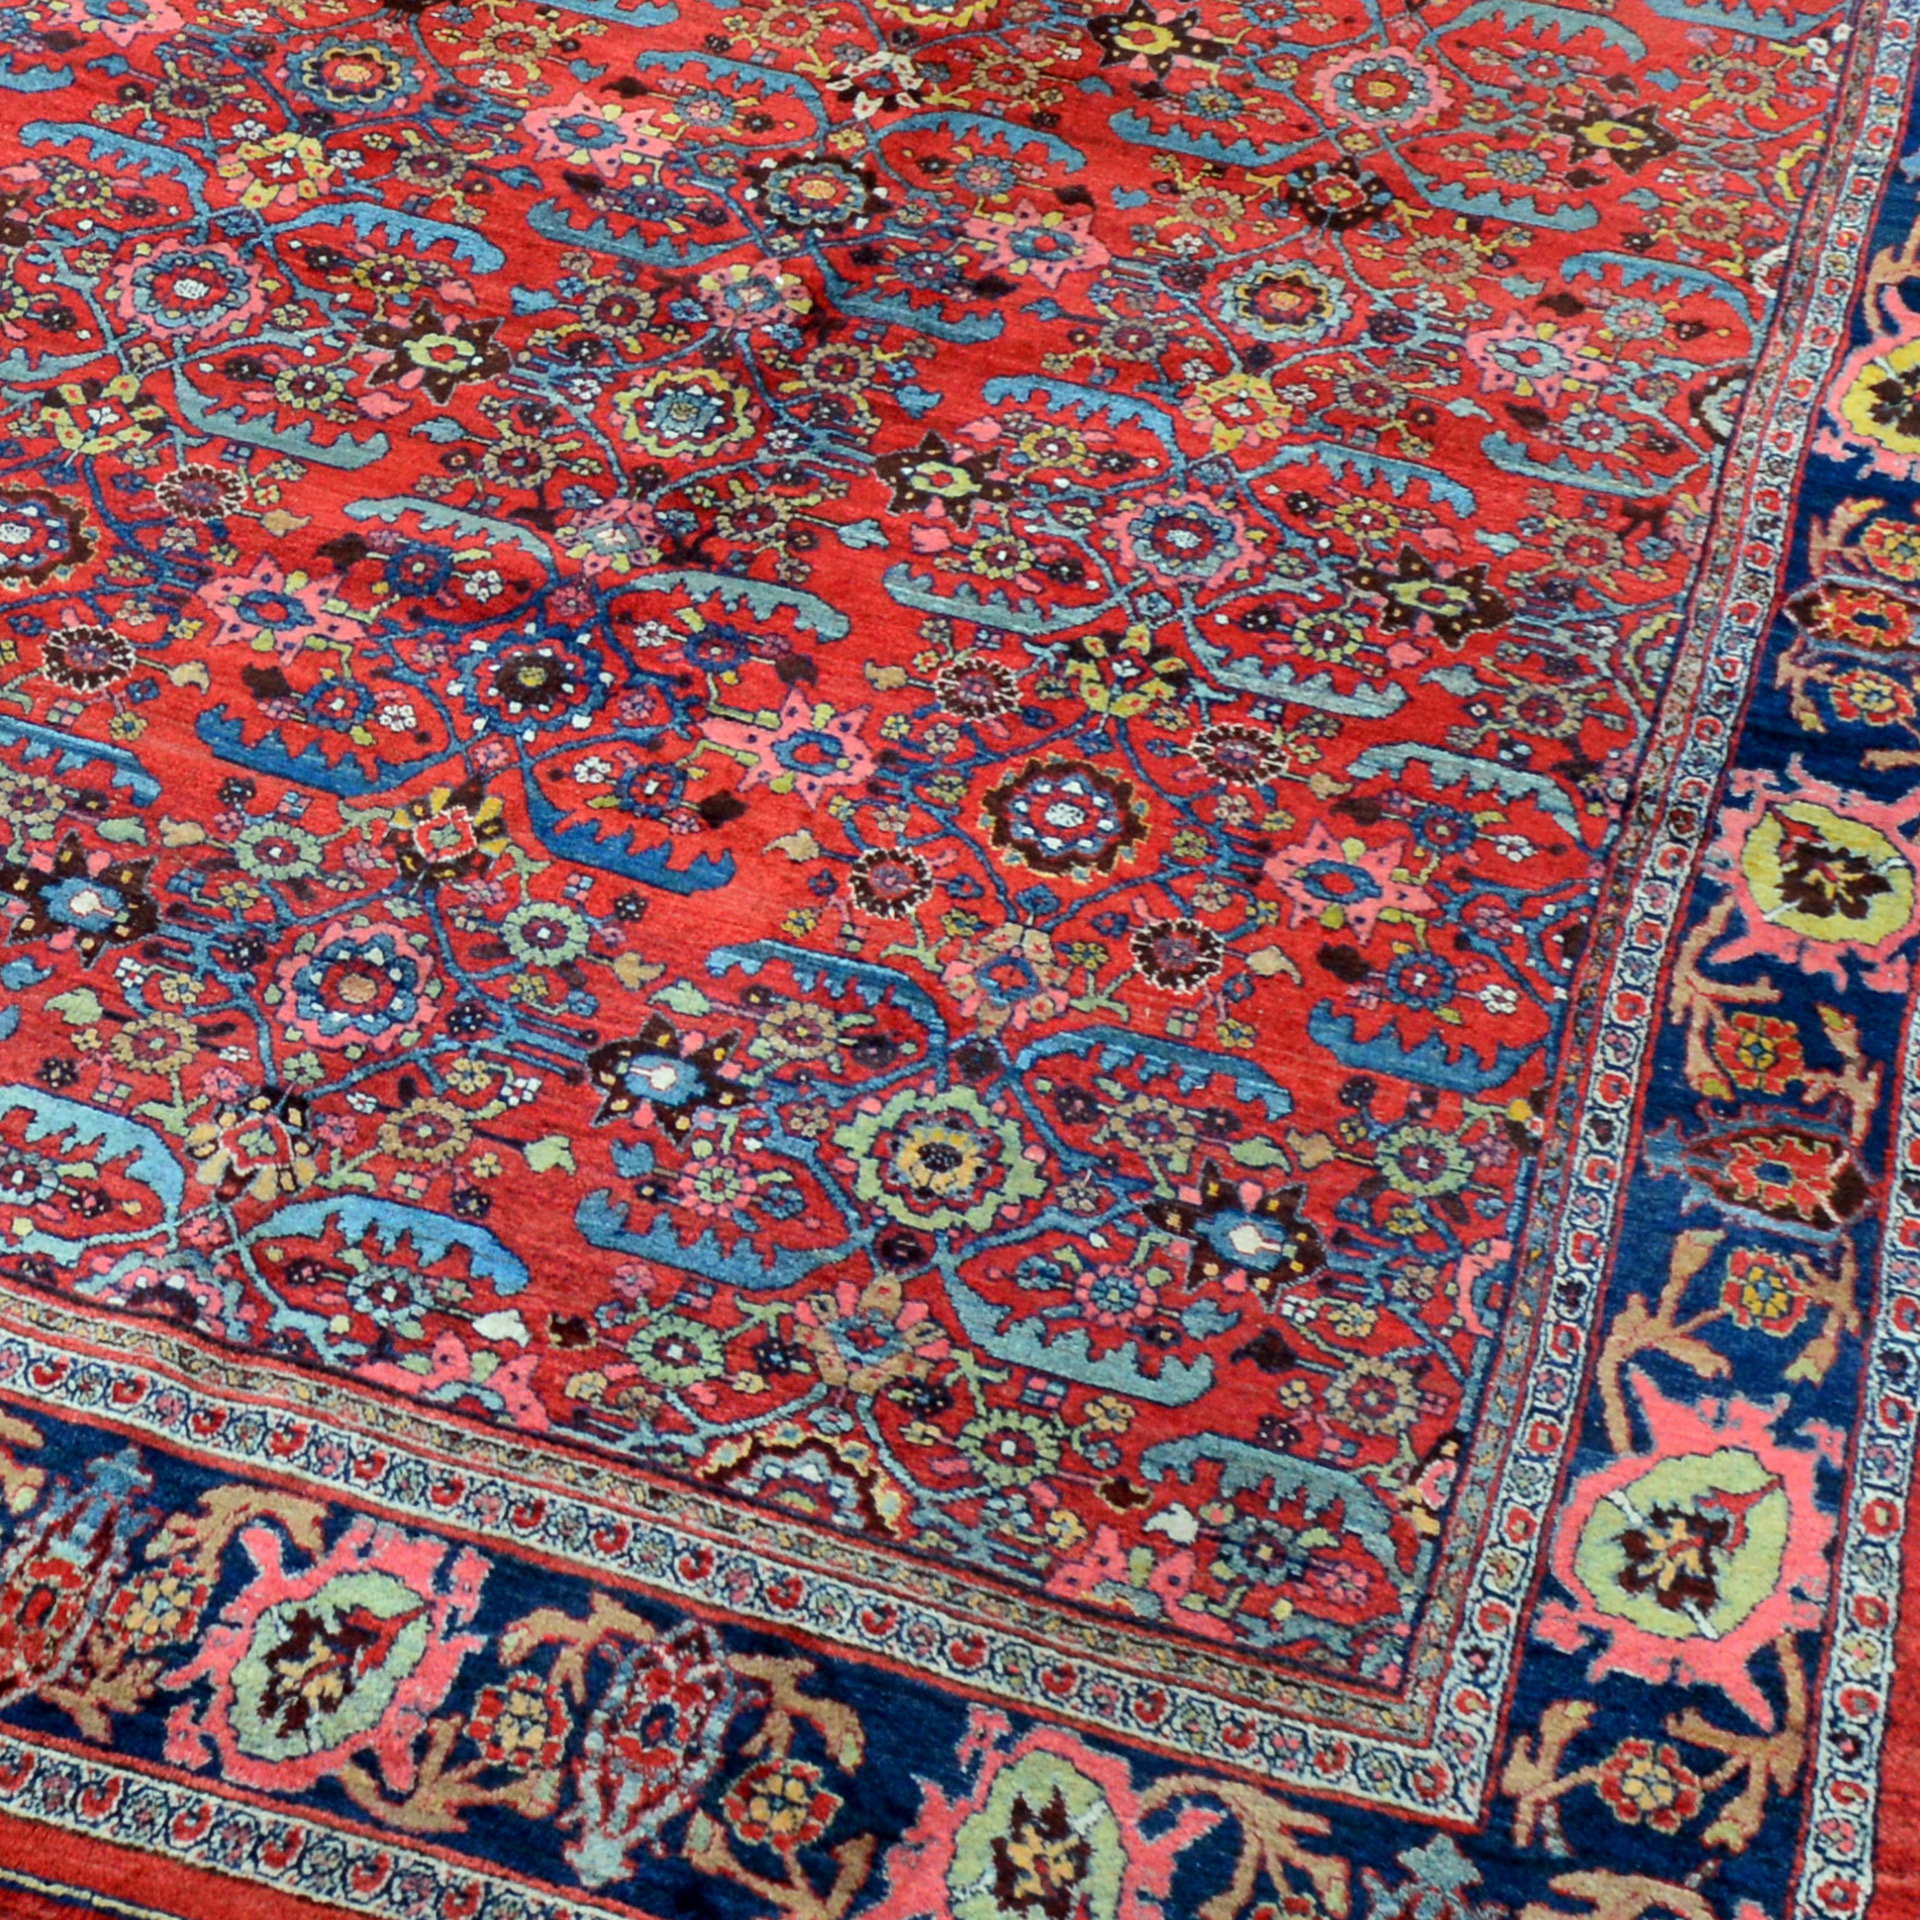 Detail of an antique Persian Bidjar carpet - Douglas Stock Gallery, South Natick / Wellesley, MA area